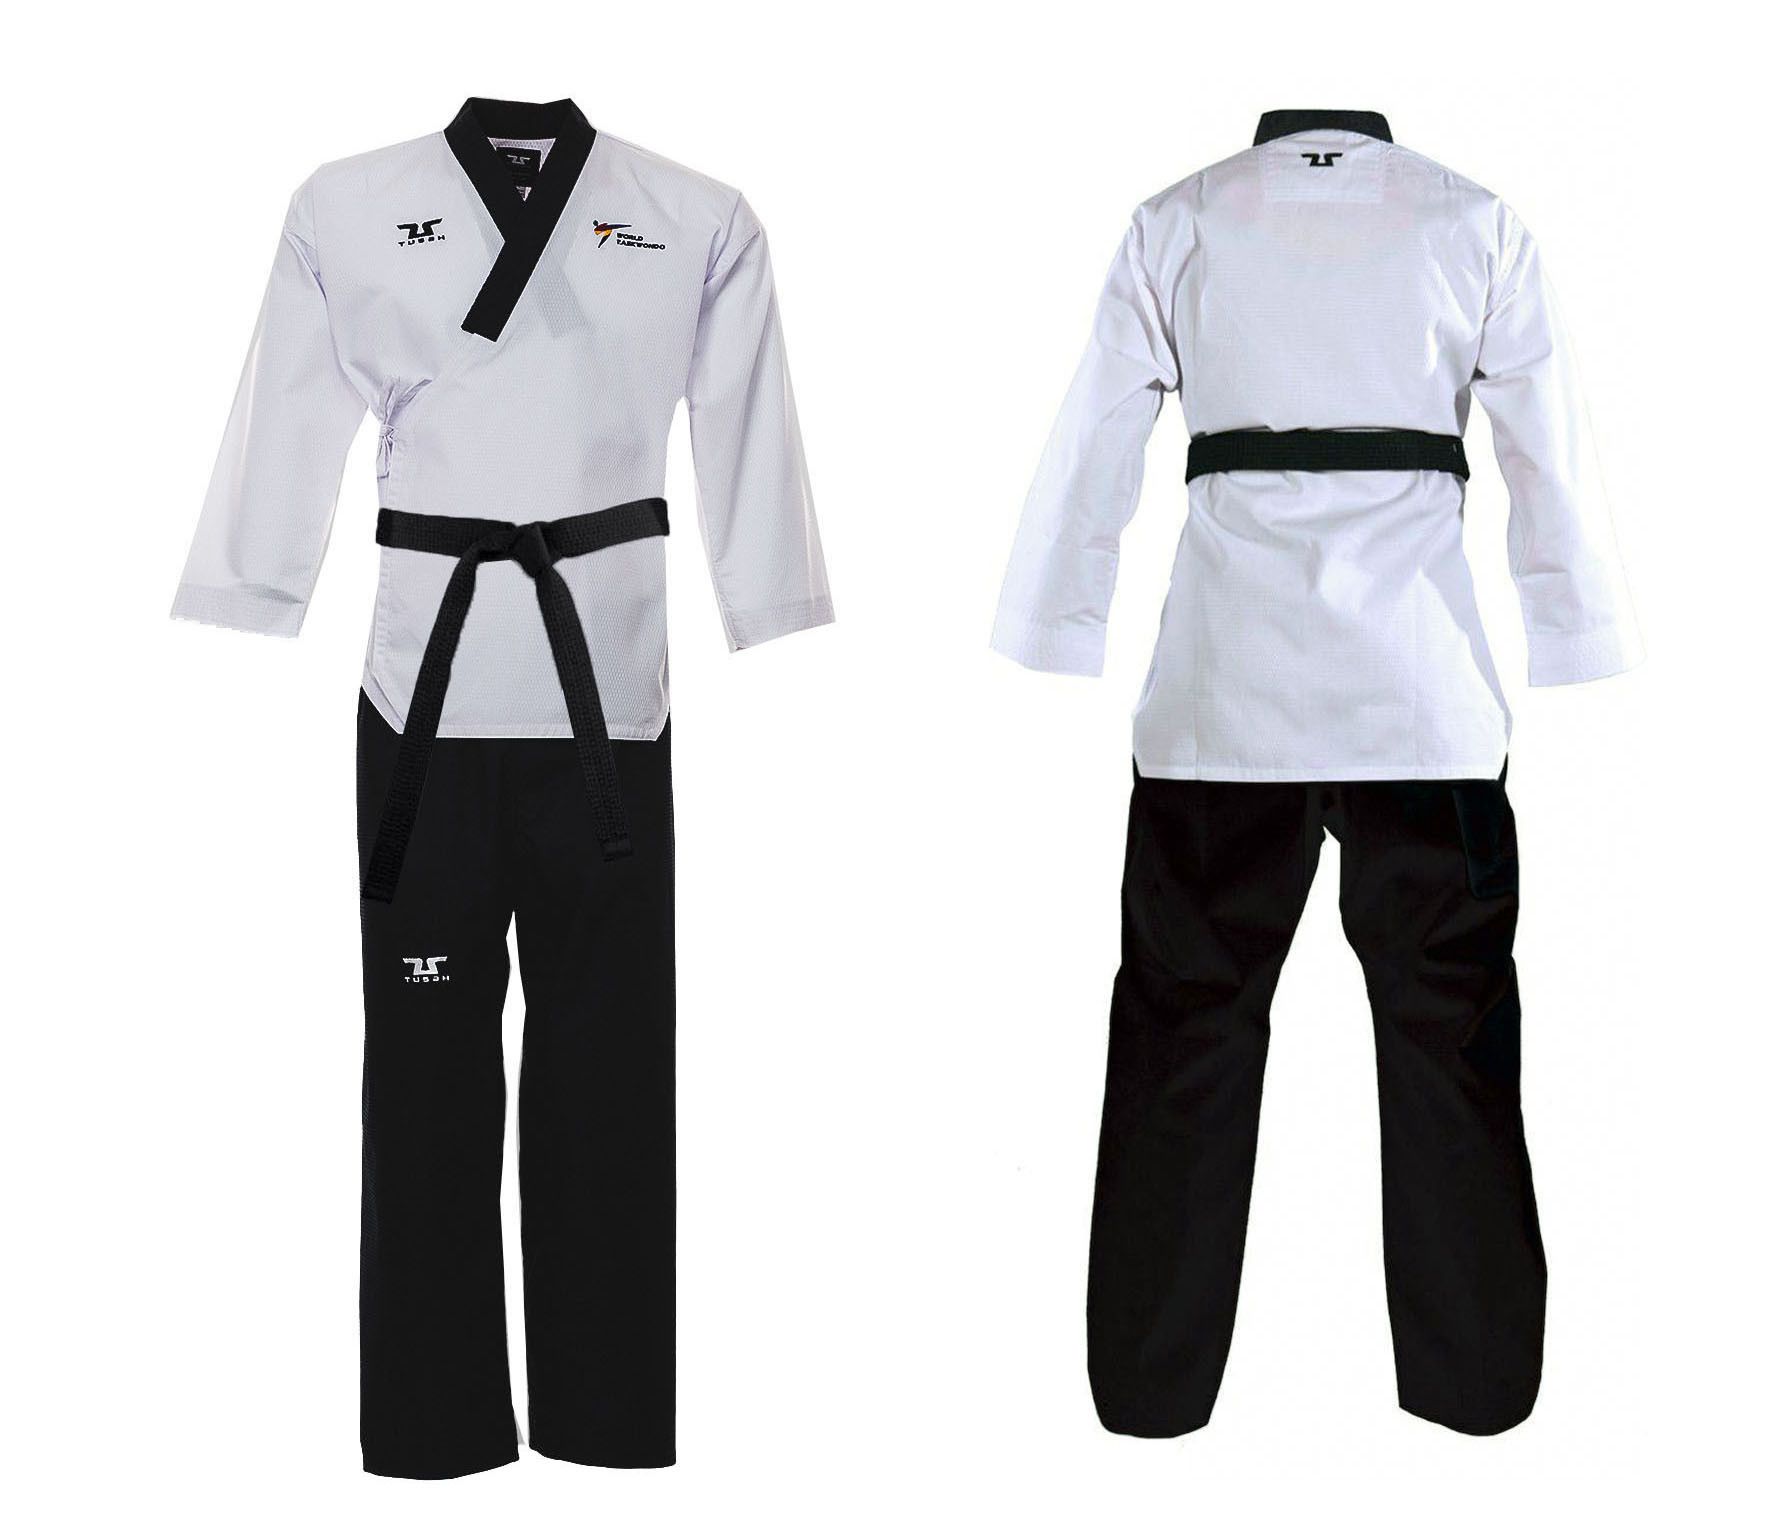 Poomsae Professional Maschile Tusah per Taekwondo Omologato WT Made in Korea per forme e competizioni